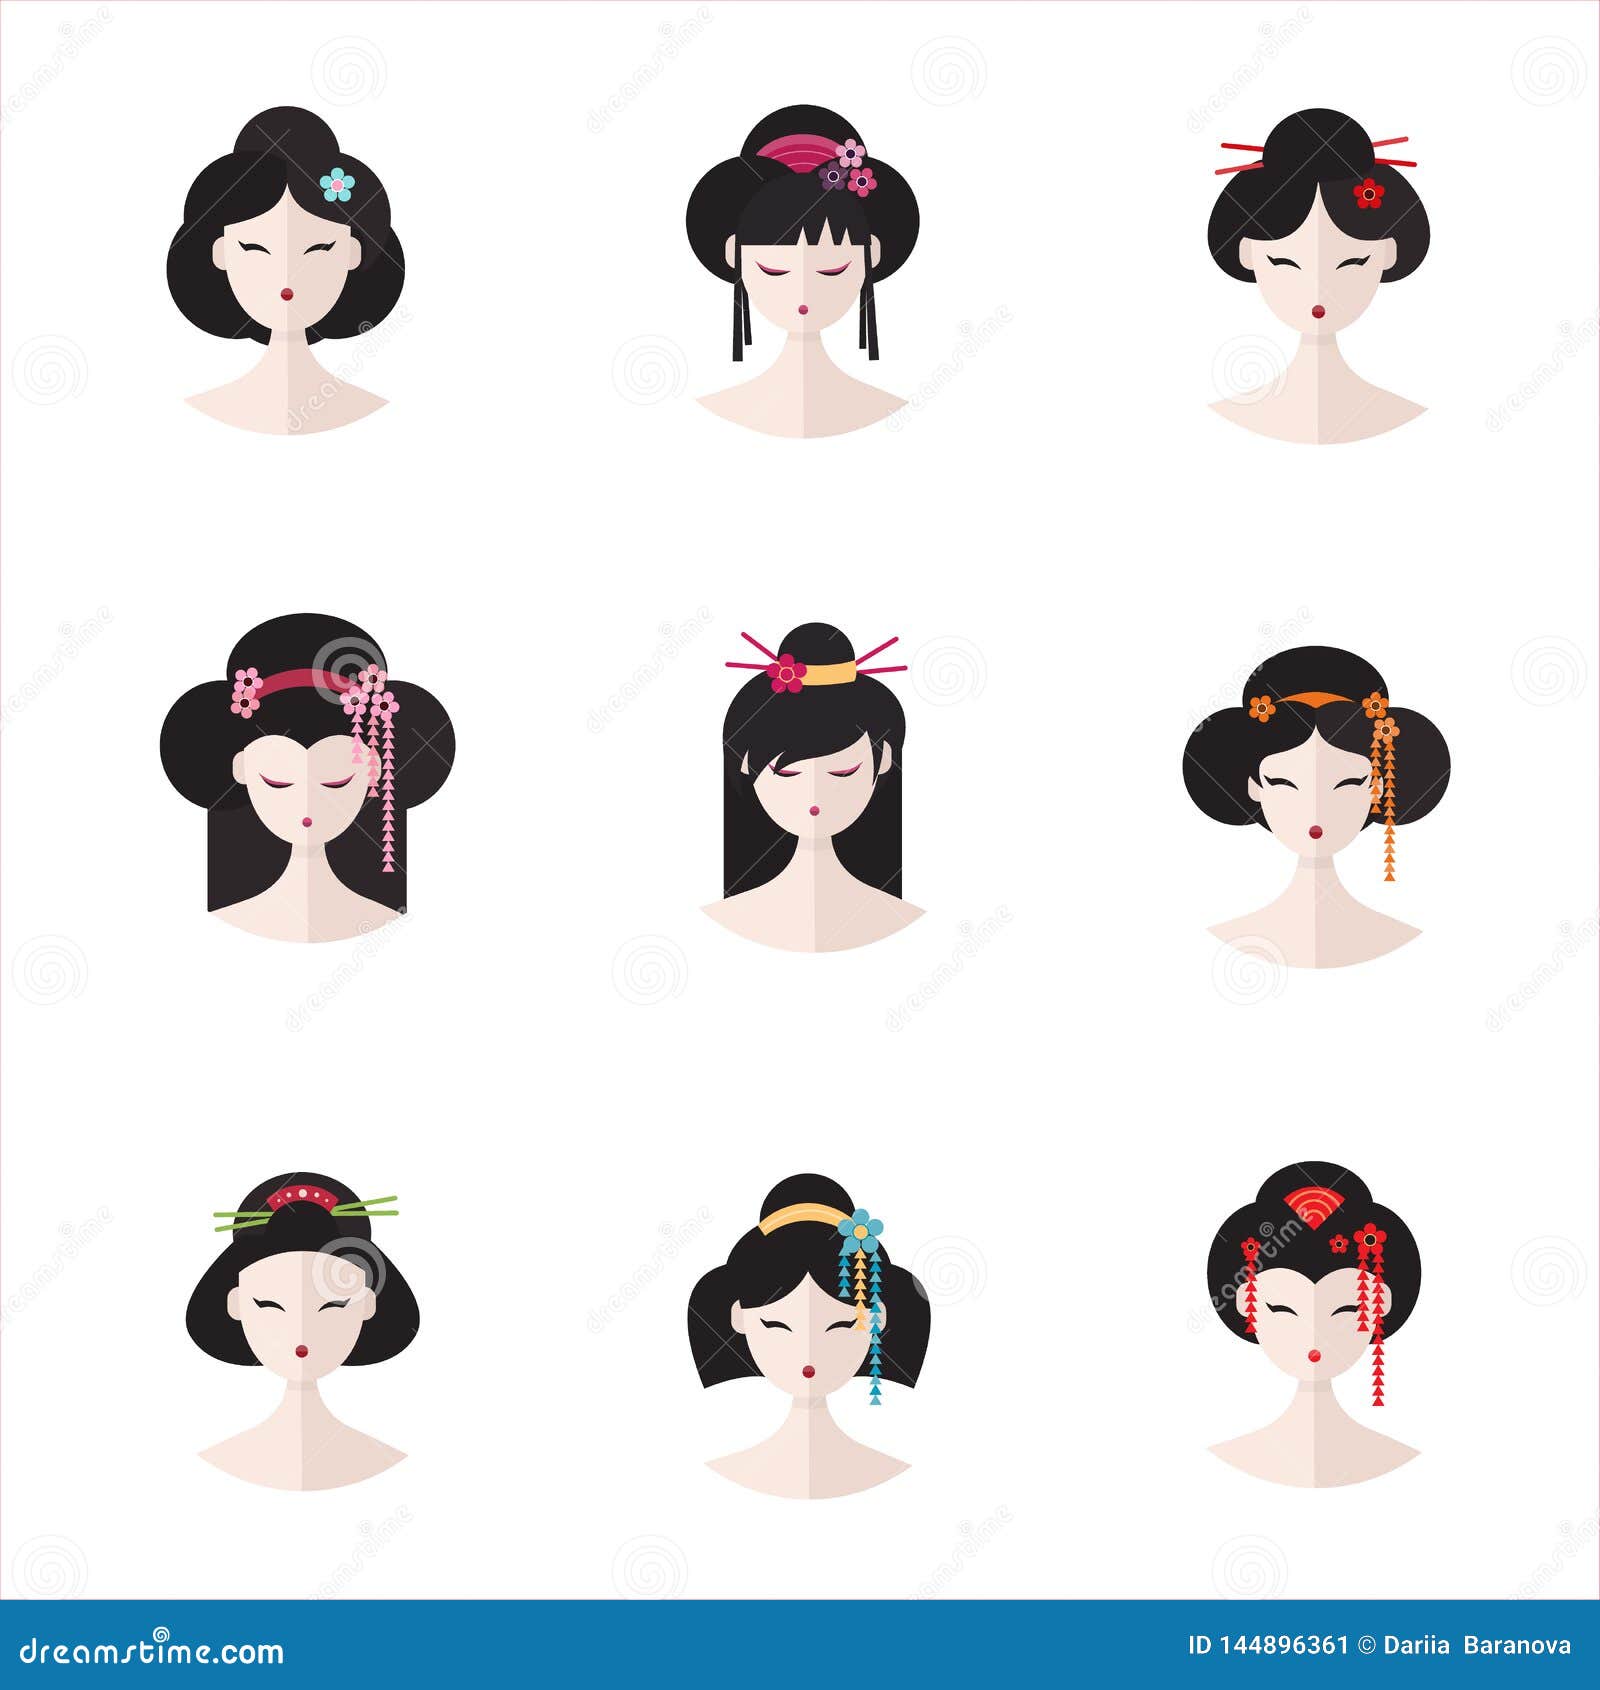 Japanese hairstyles - All4hairsalon